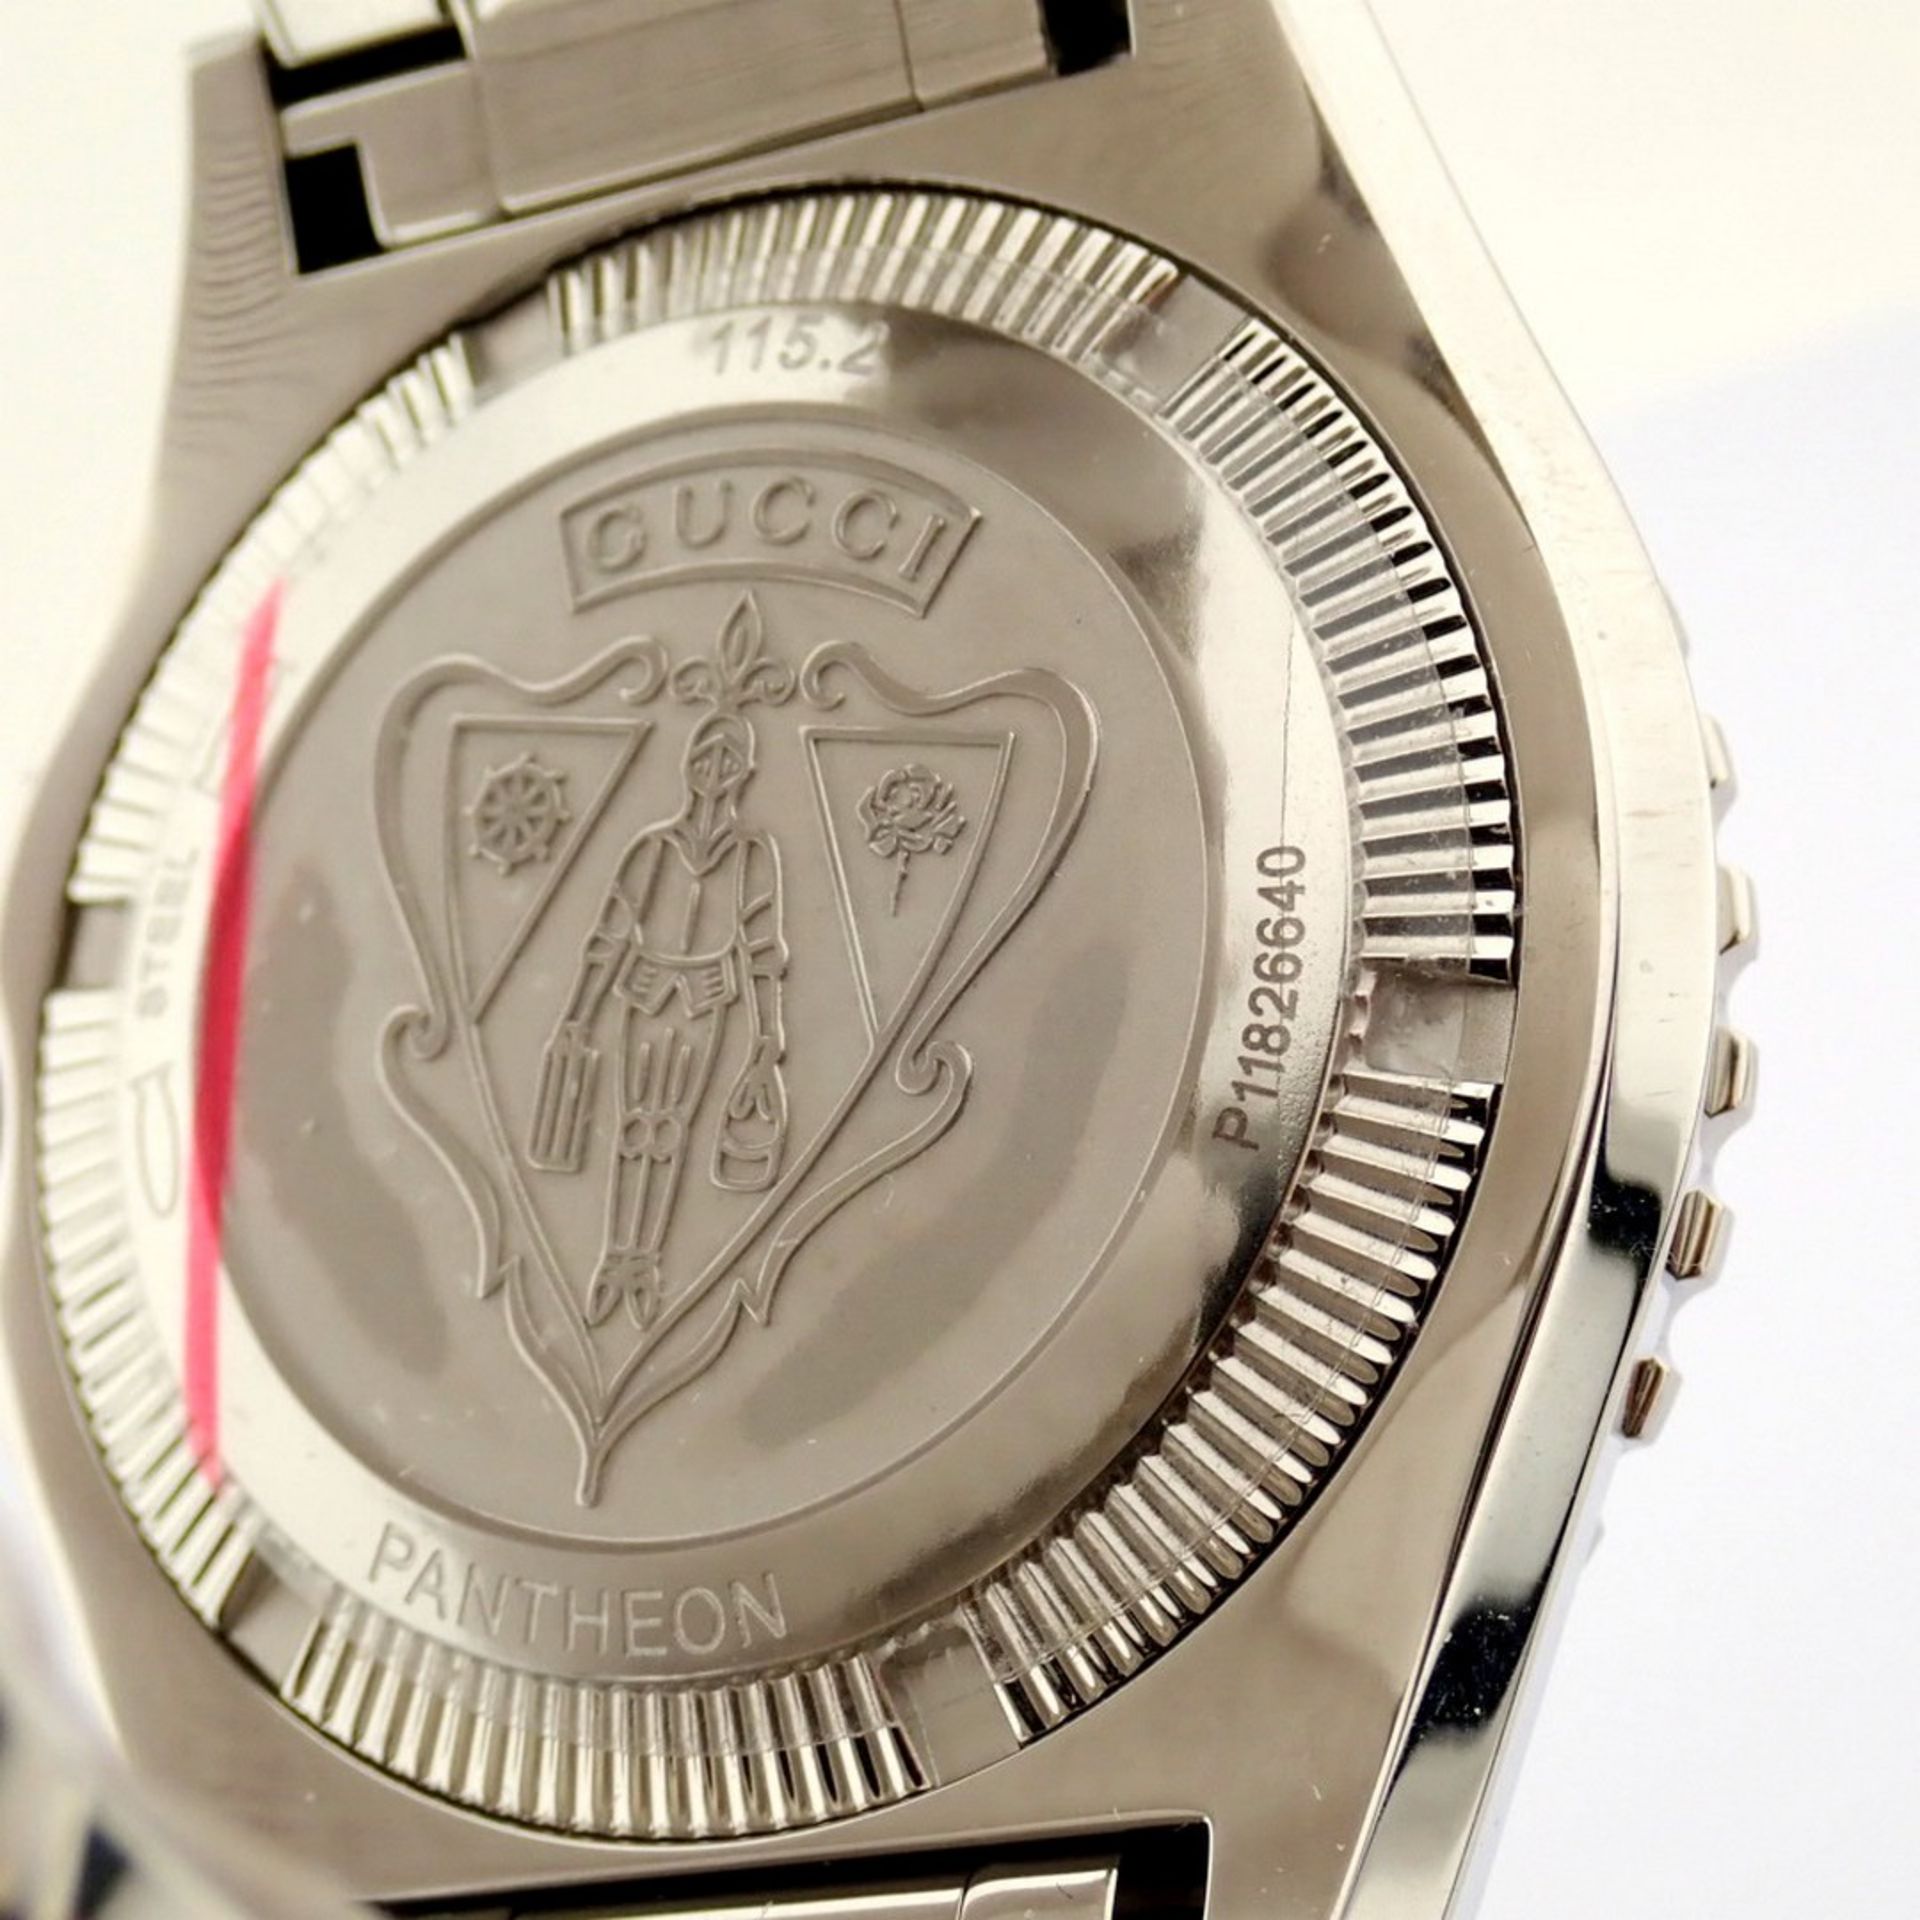 Gucci / Pantheon 115.2 (Brand New) - Gentlmen's Steel Wrist Watch - Image 13 of 13